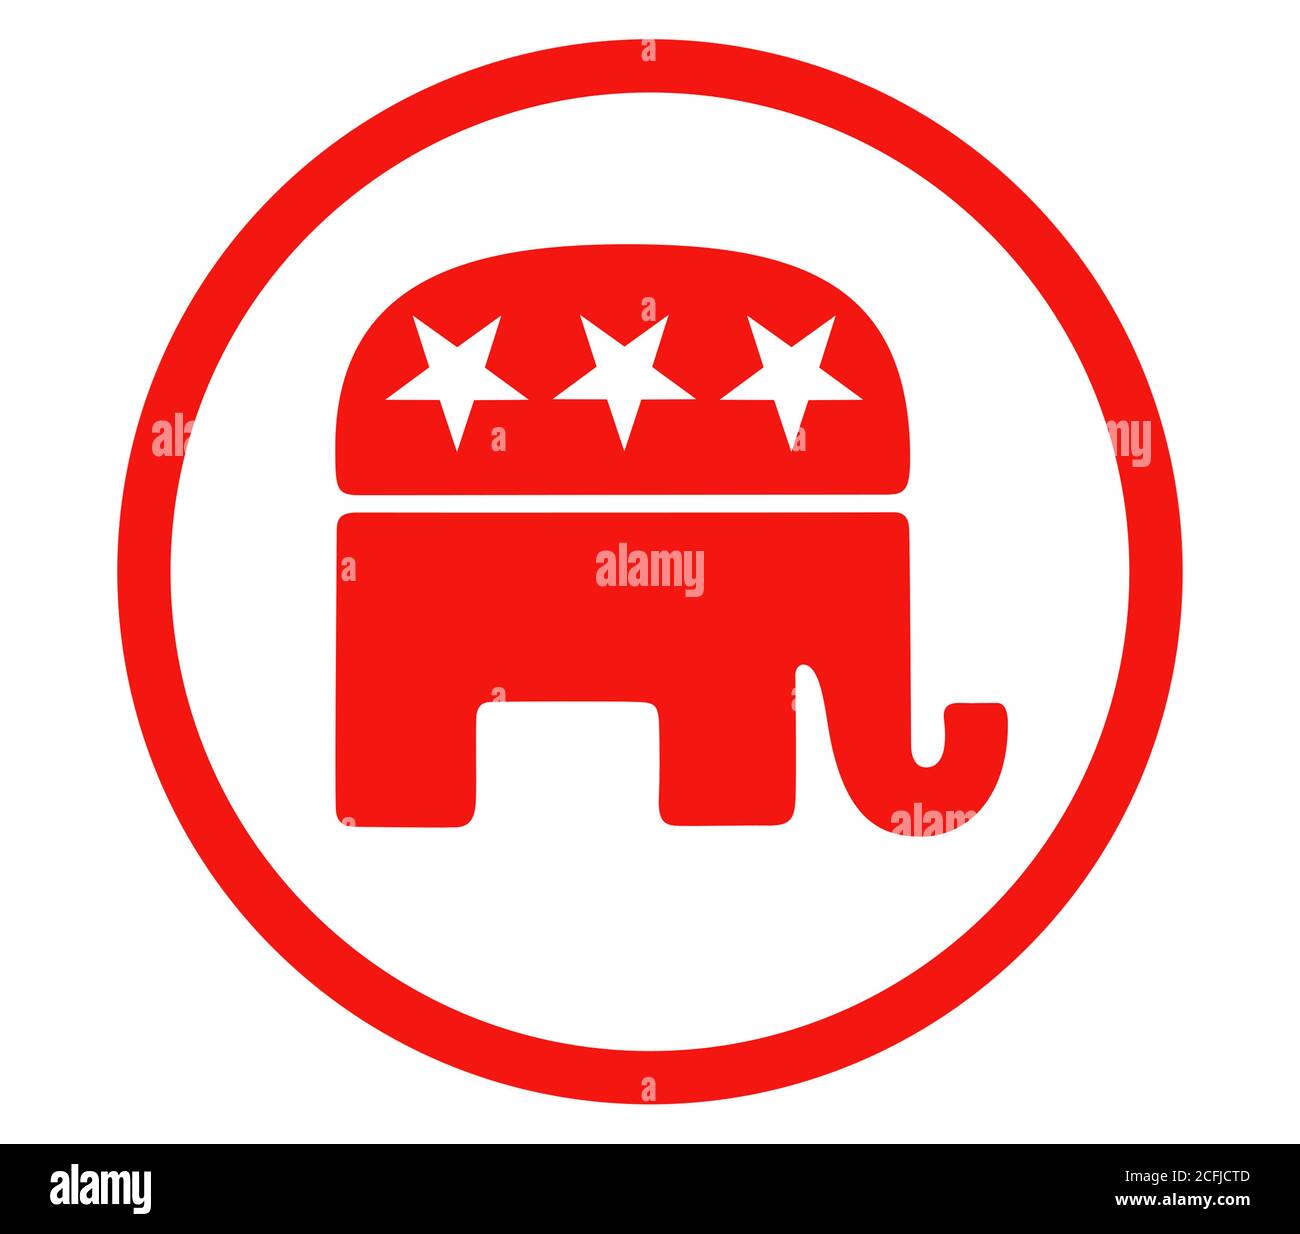 Republikanische Partei logo Stockfoto